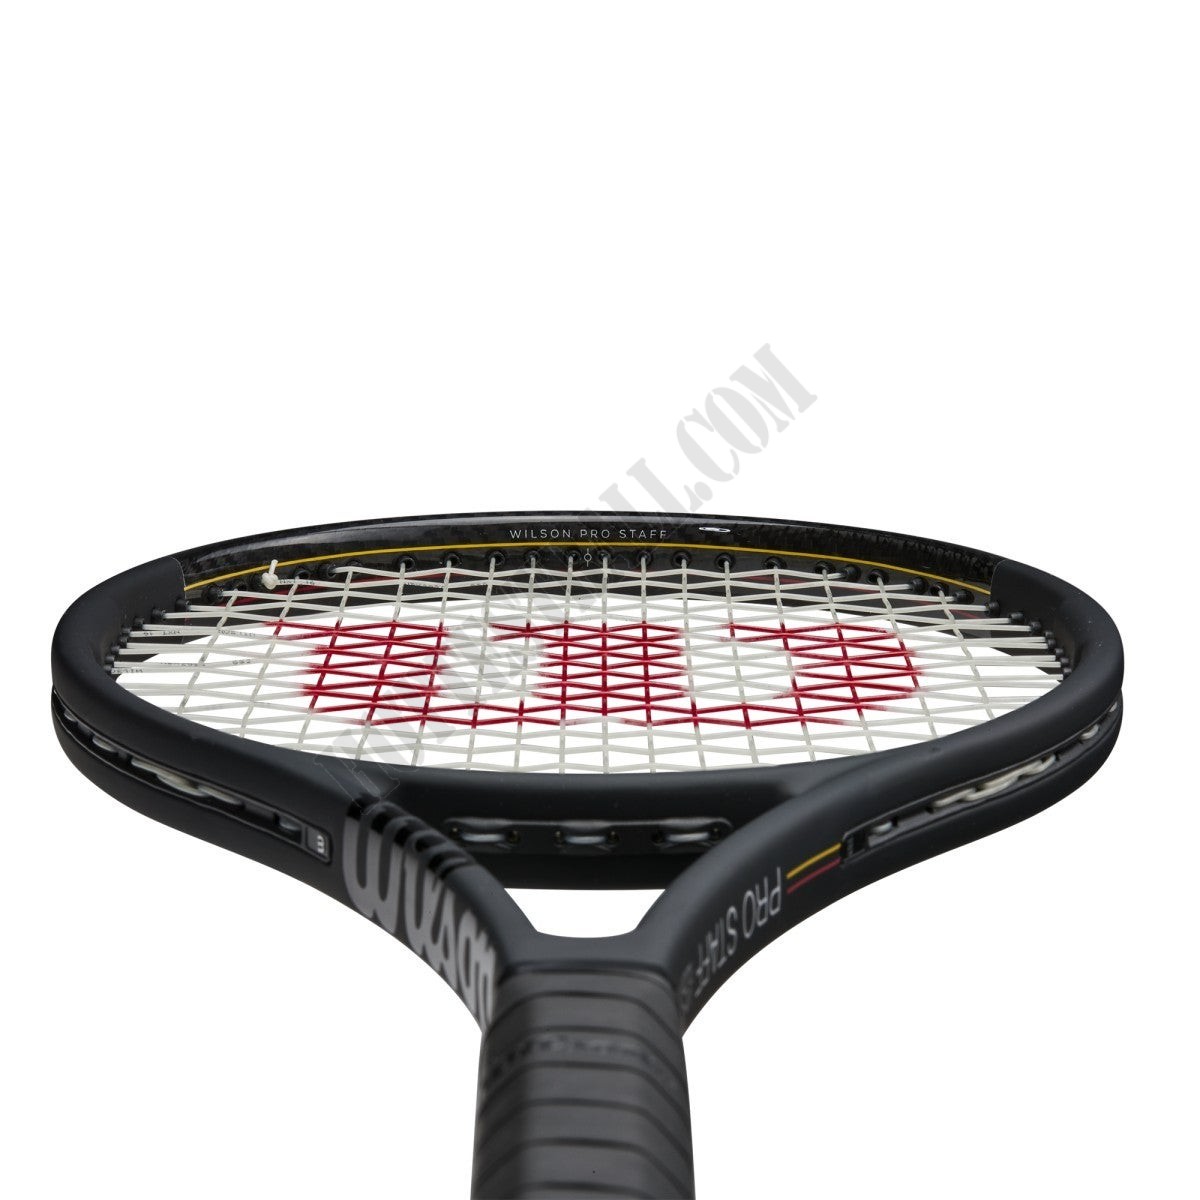 Pro Staff 97 v13 Tennis Racket - Wilson Discount Store - -4